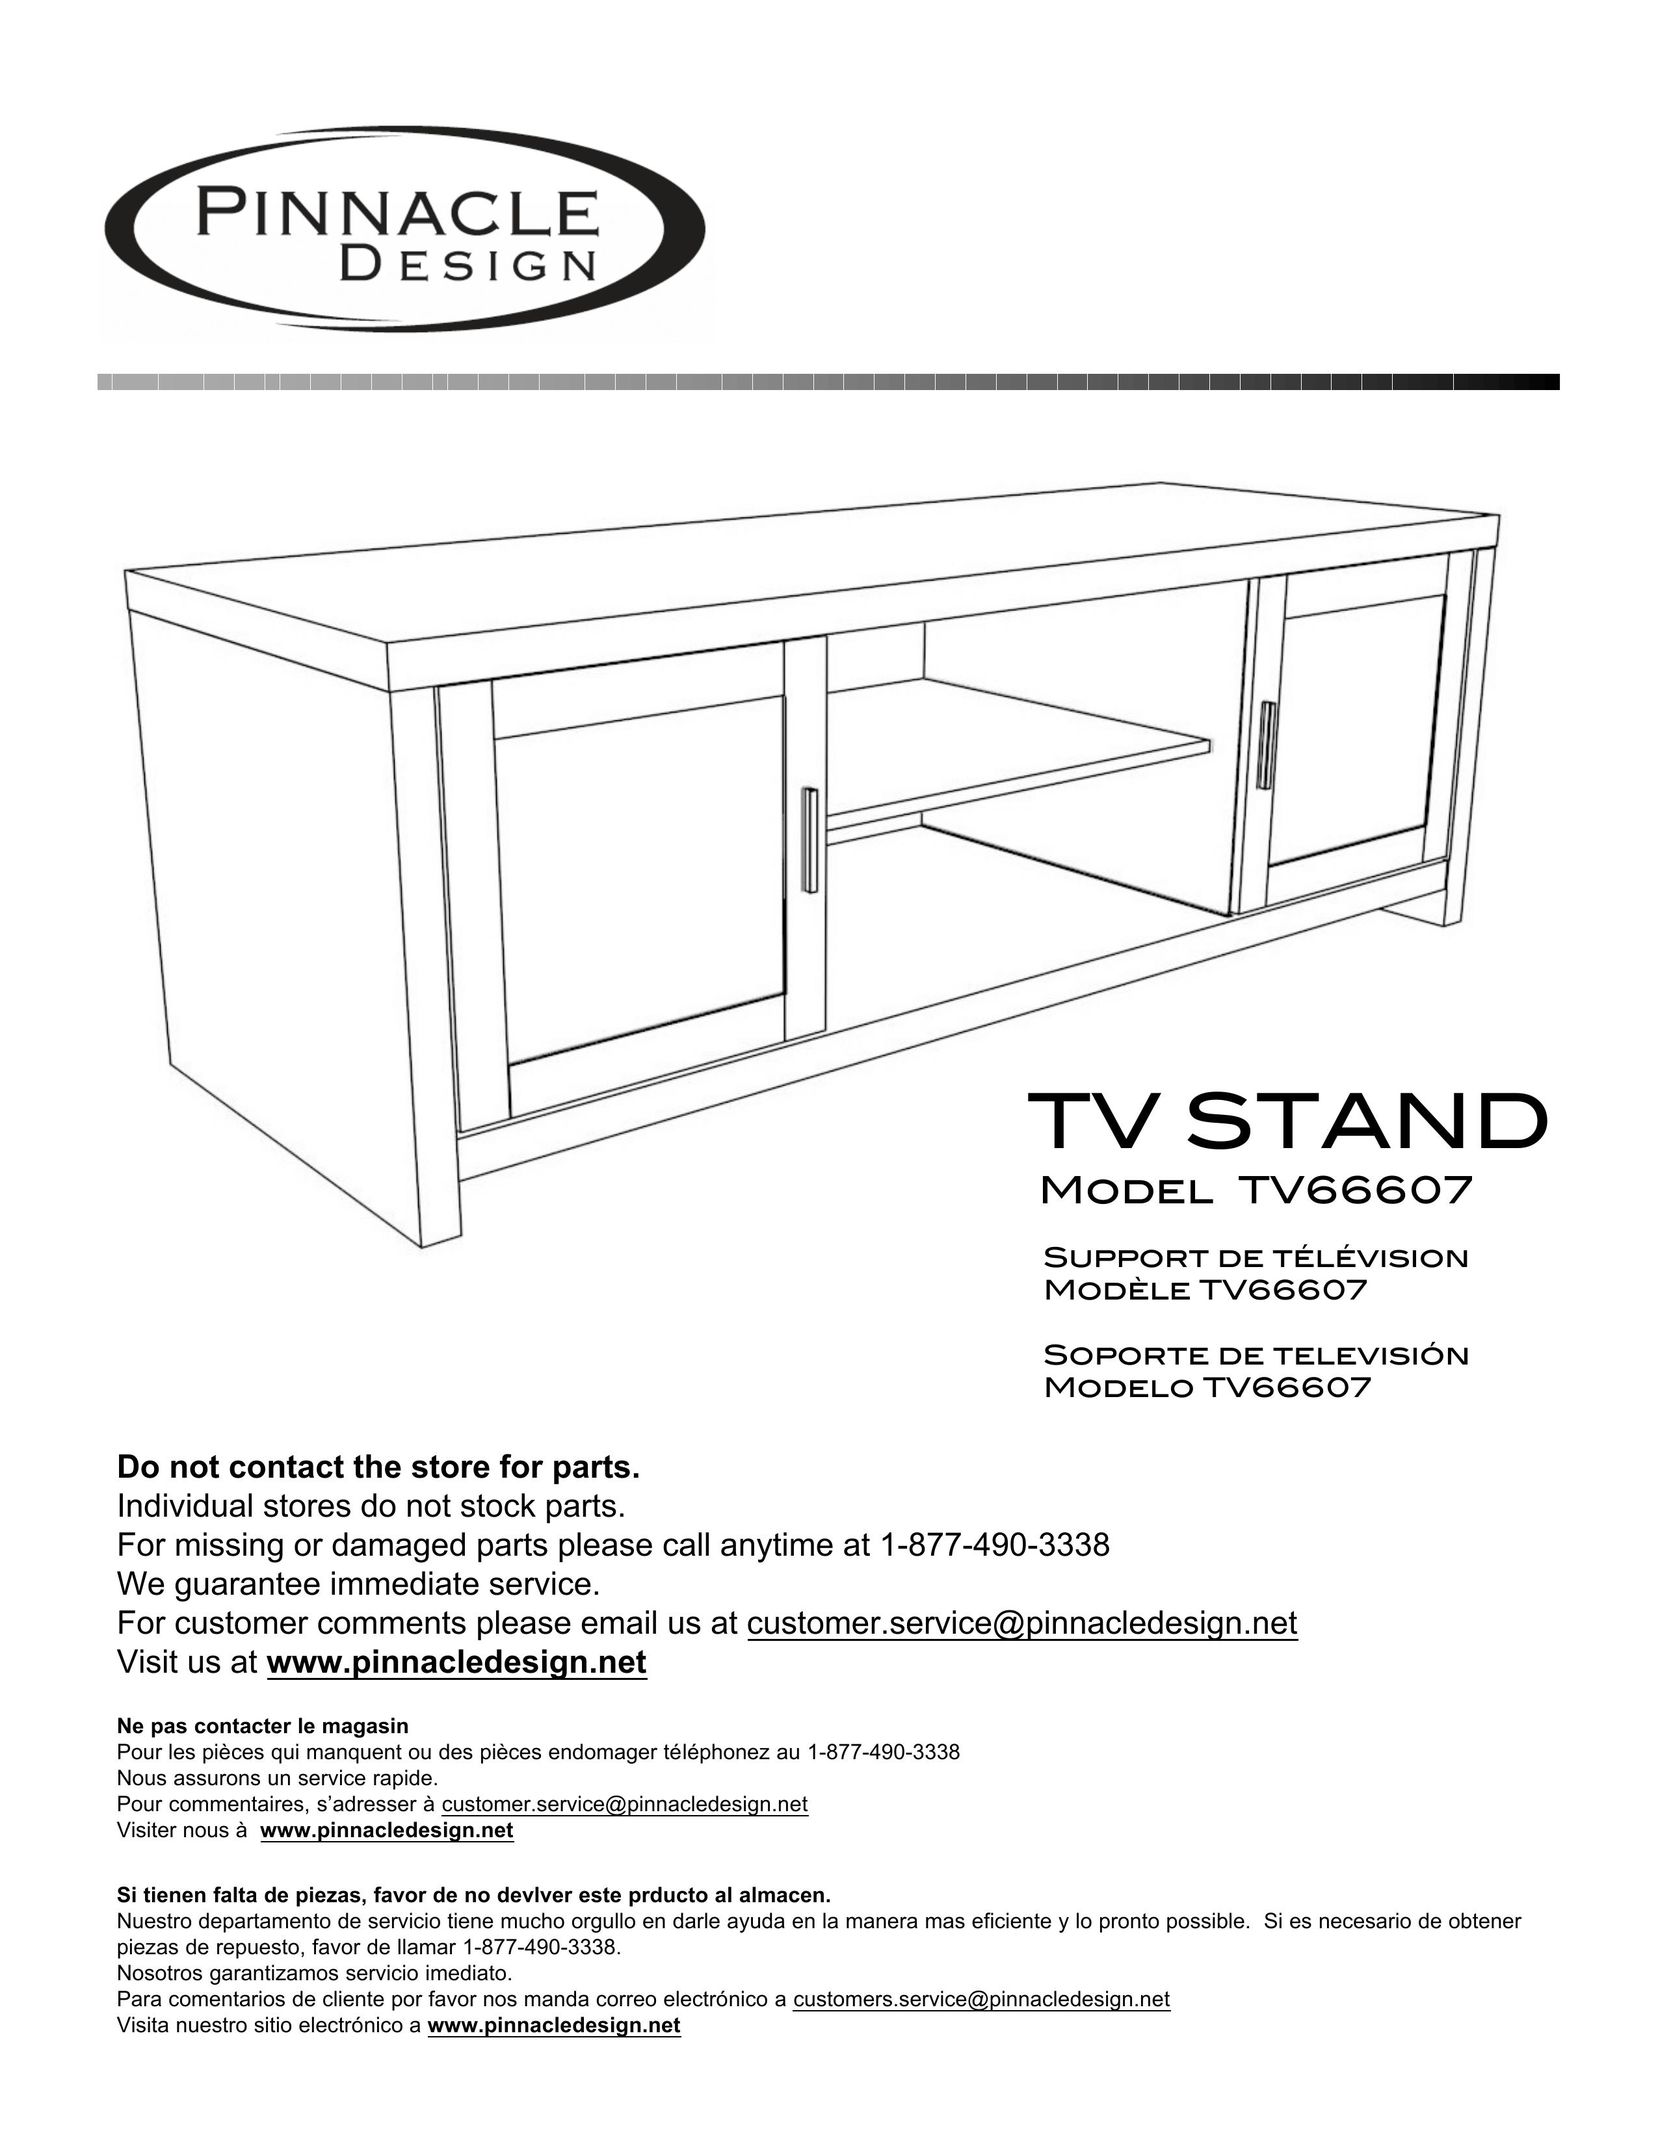 Pinnacle Design TV66607 TV Video Accessories User Manual